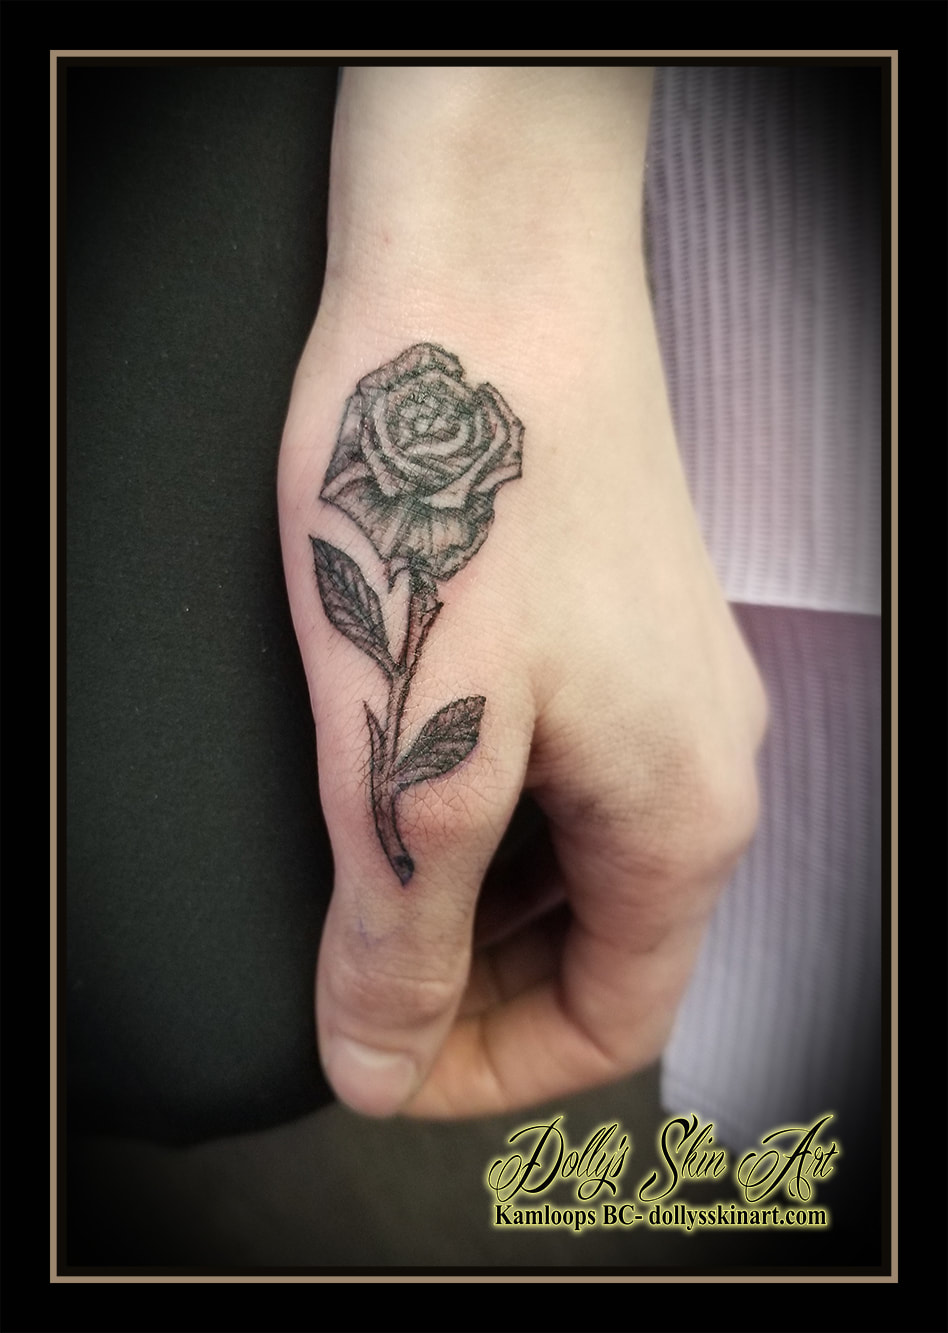 rose tattoo black and grey shading hand thumb small tattoo kamloops dolly's skin art